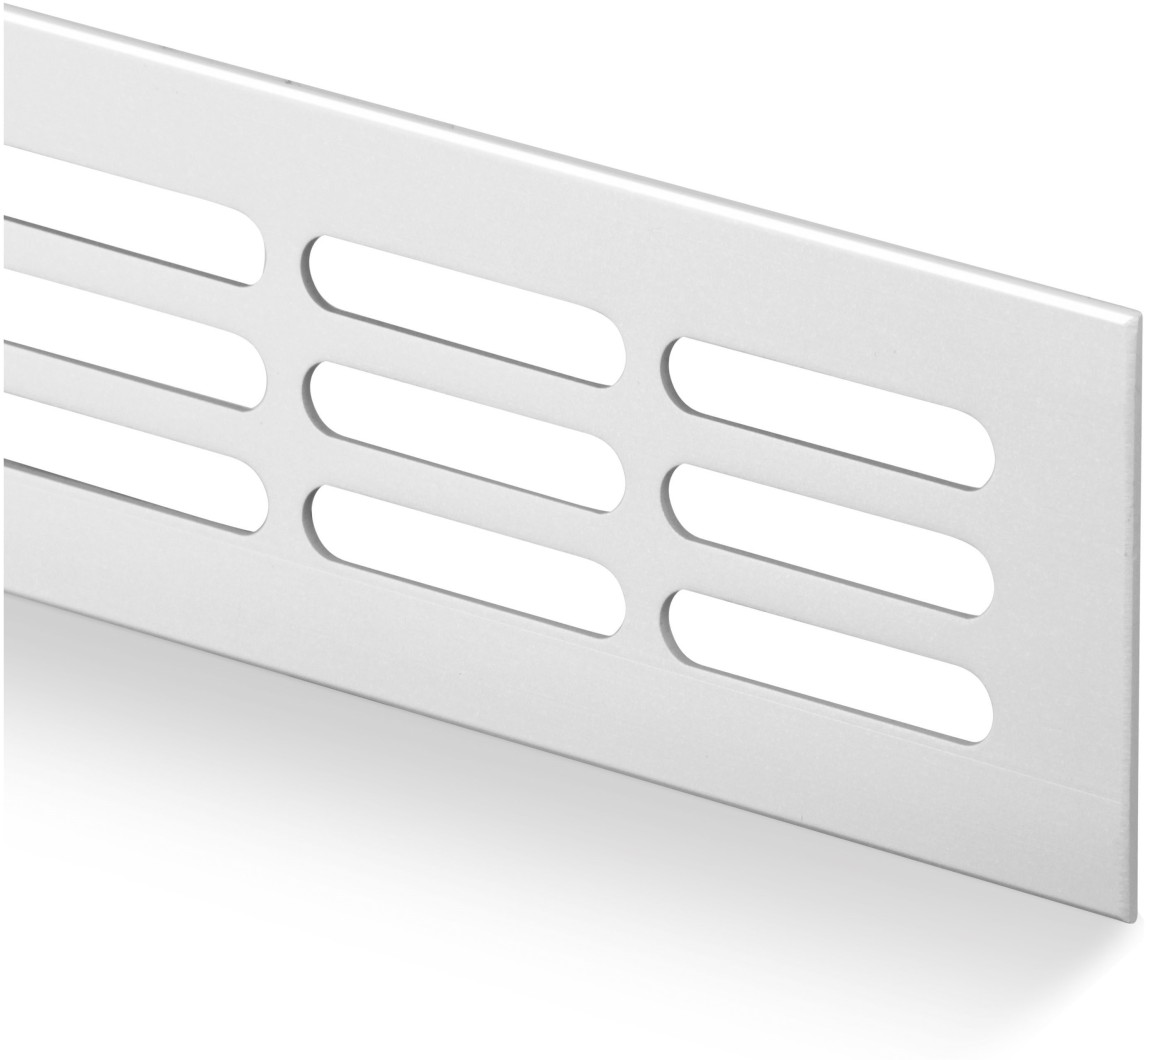 New aluminium ventilation grille 400x60 and 600x60